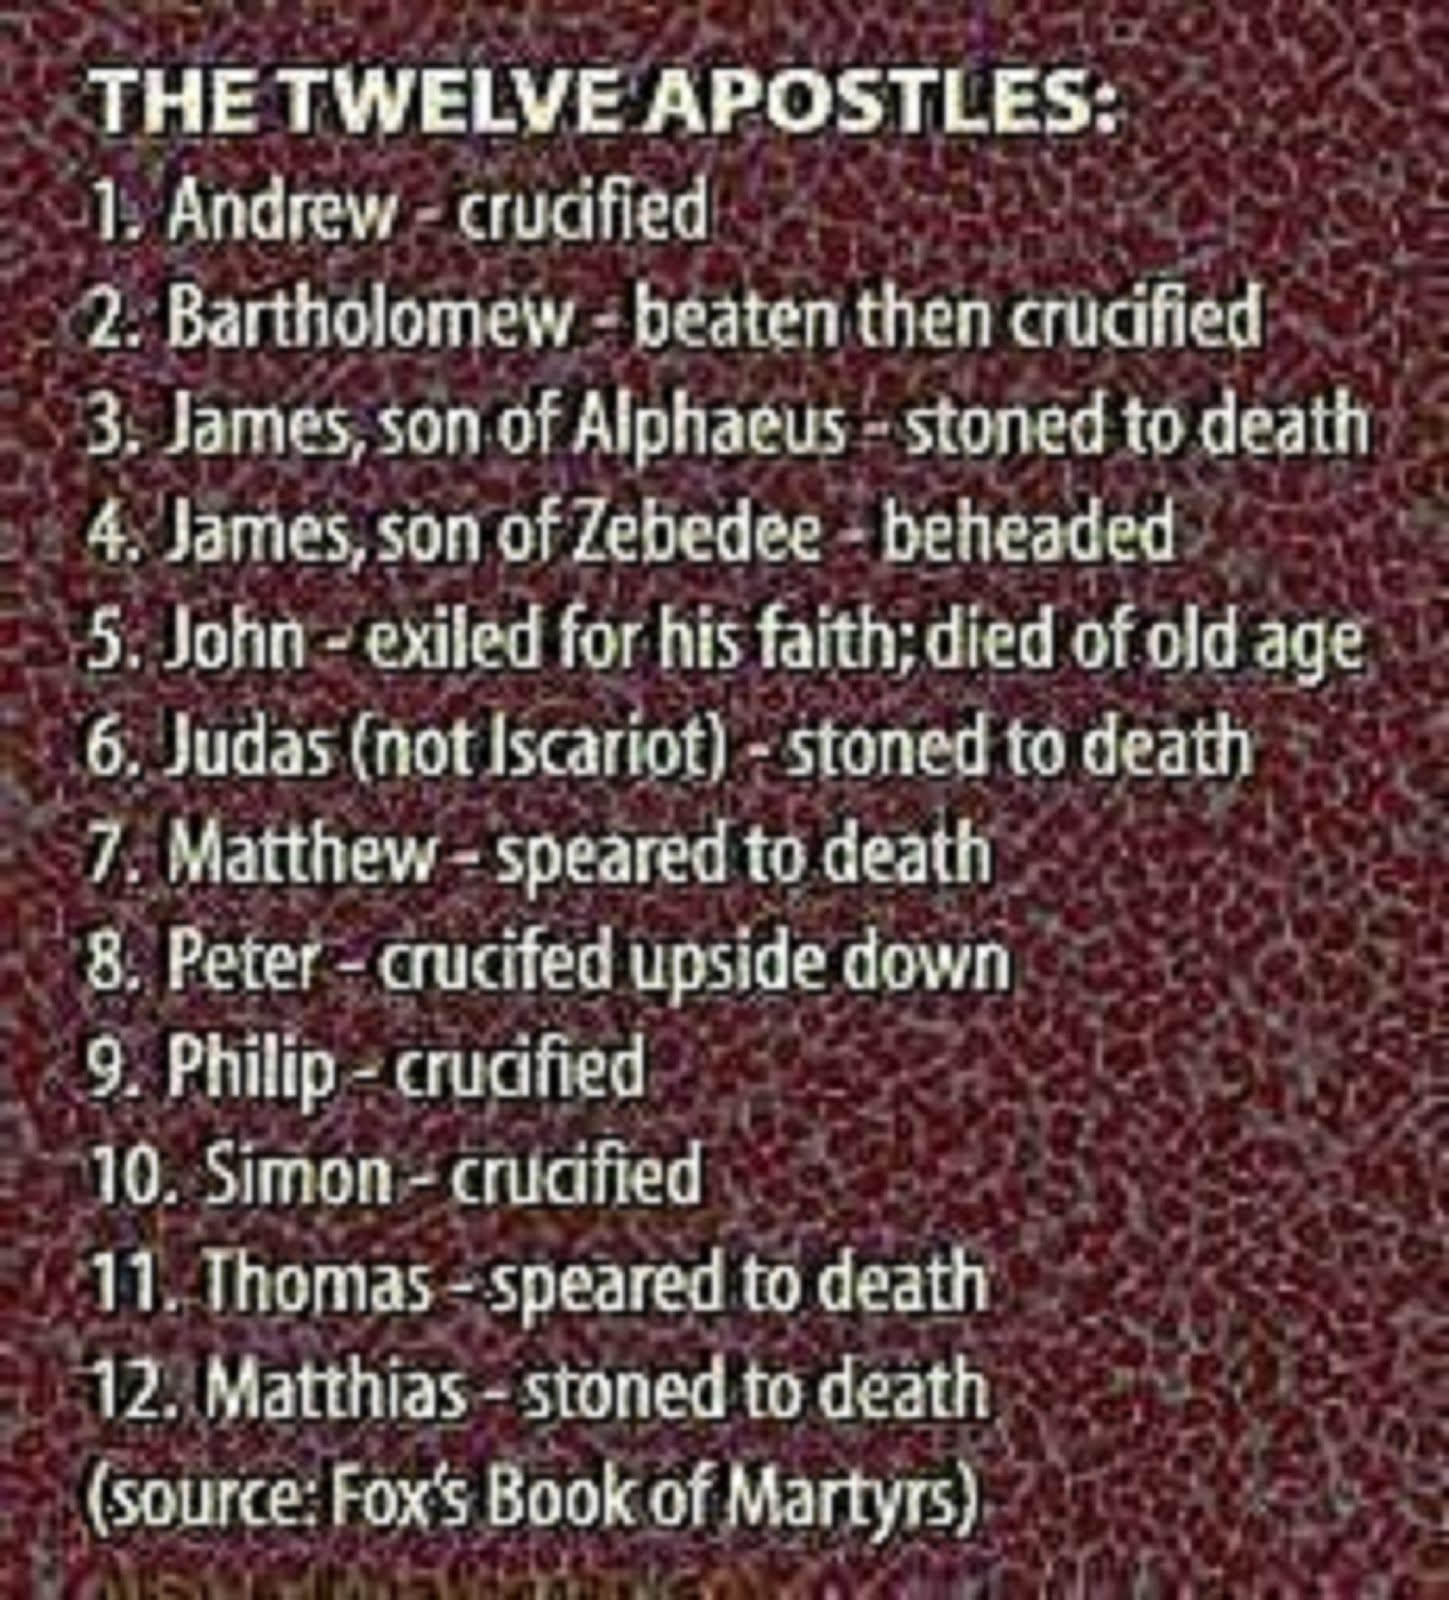 MARTYRS OF JESUS' ORIGINAL 12 DISCIPLES